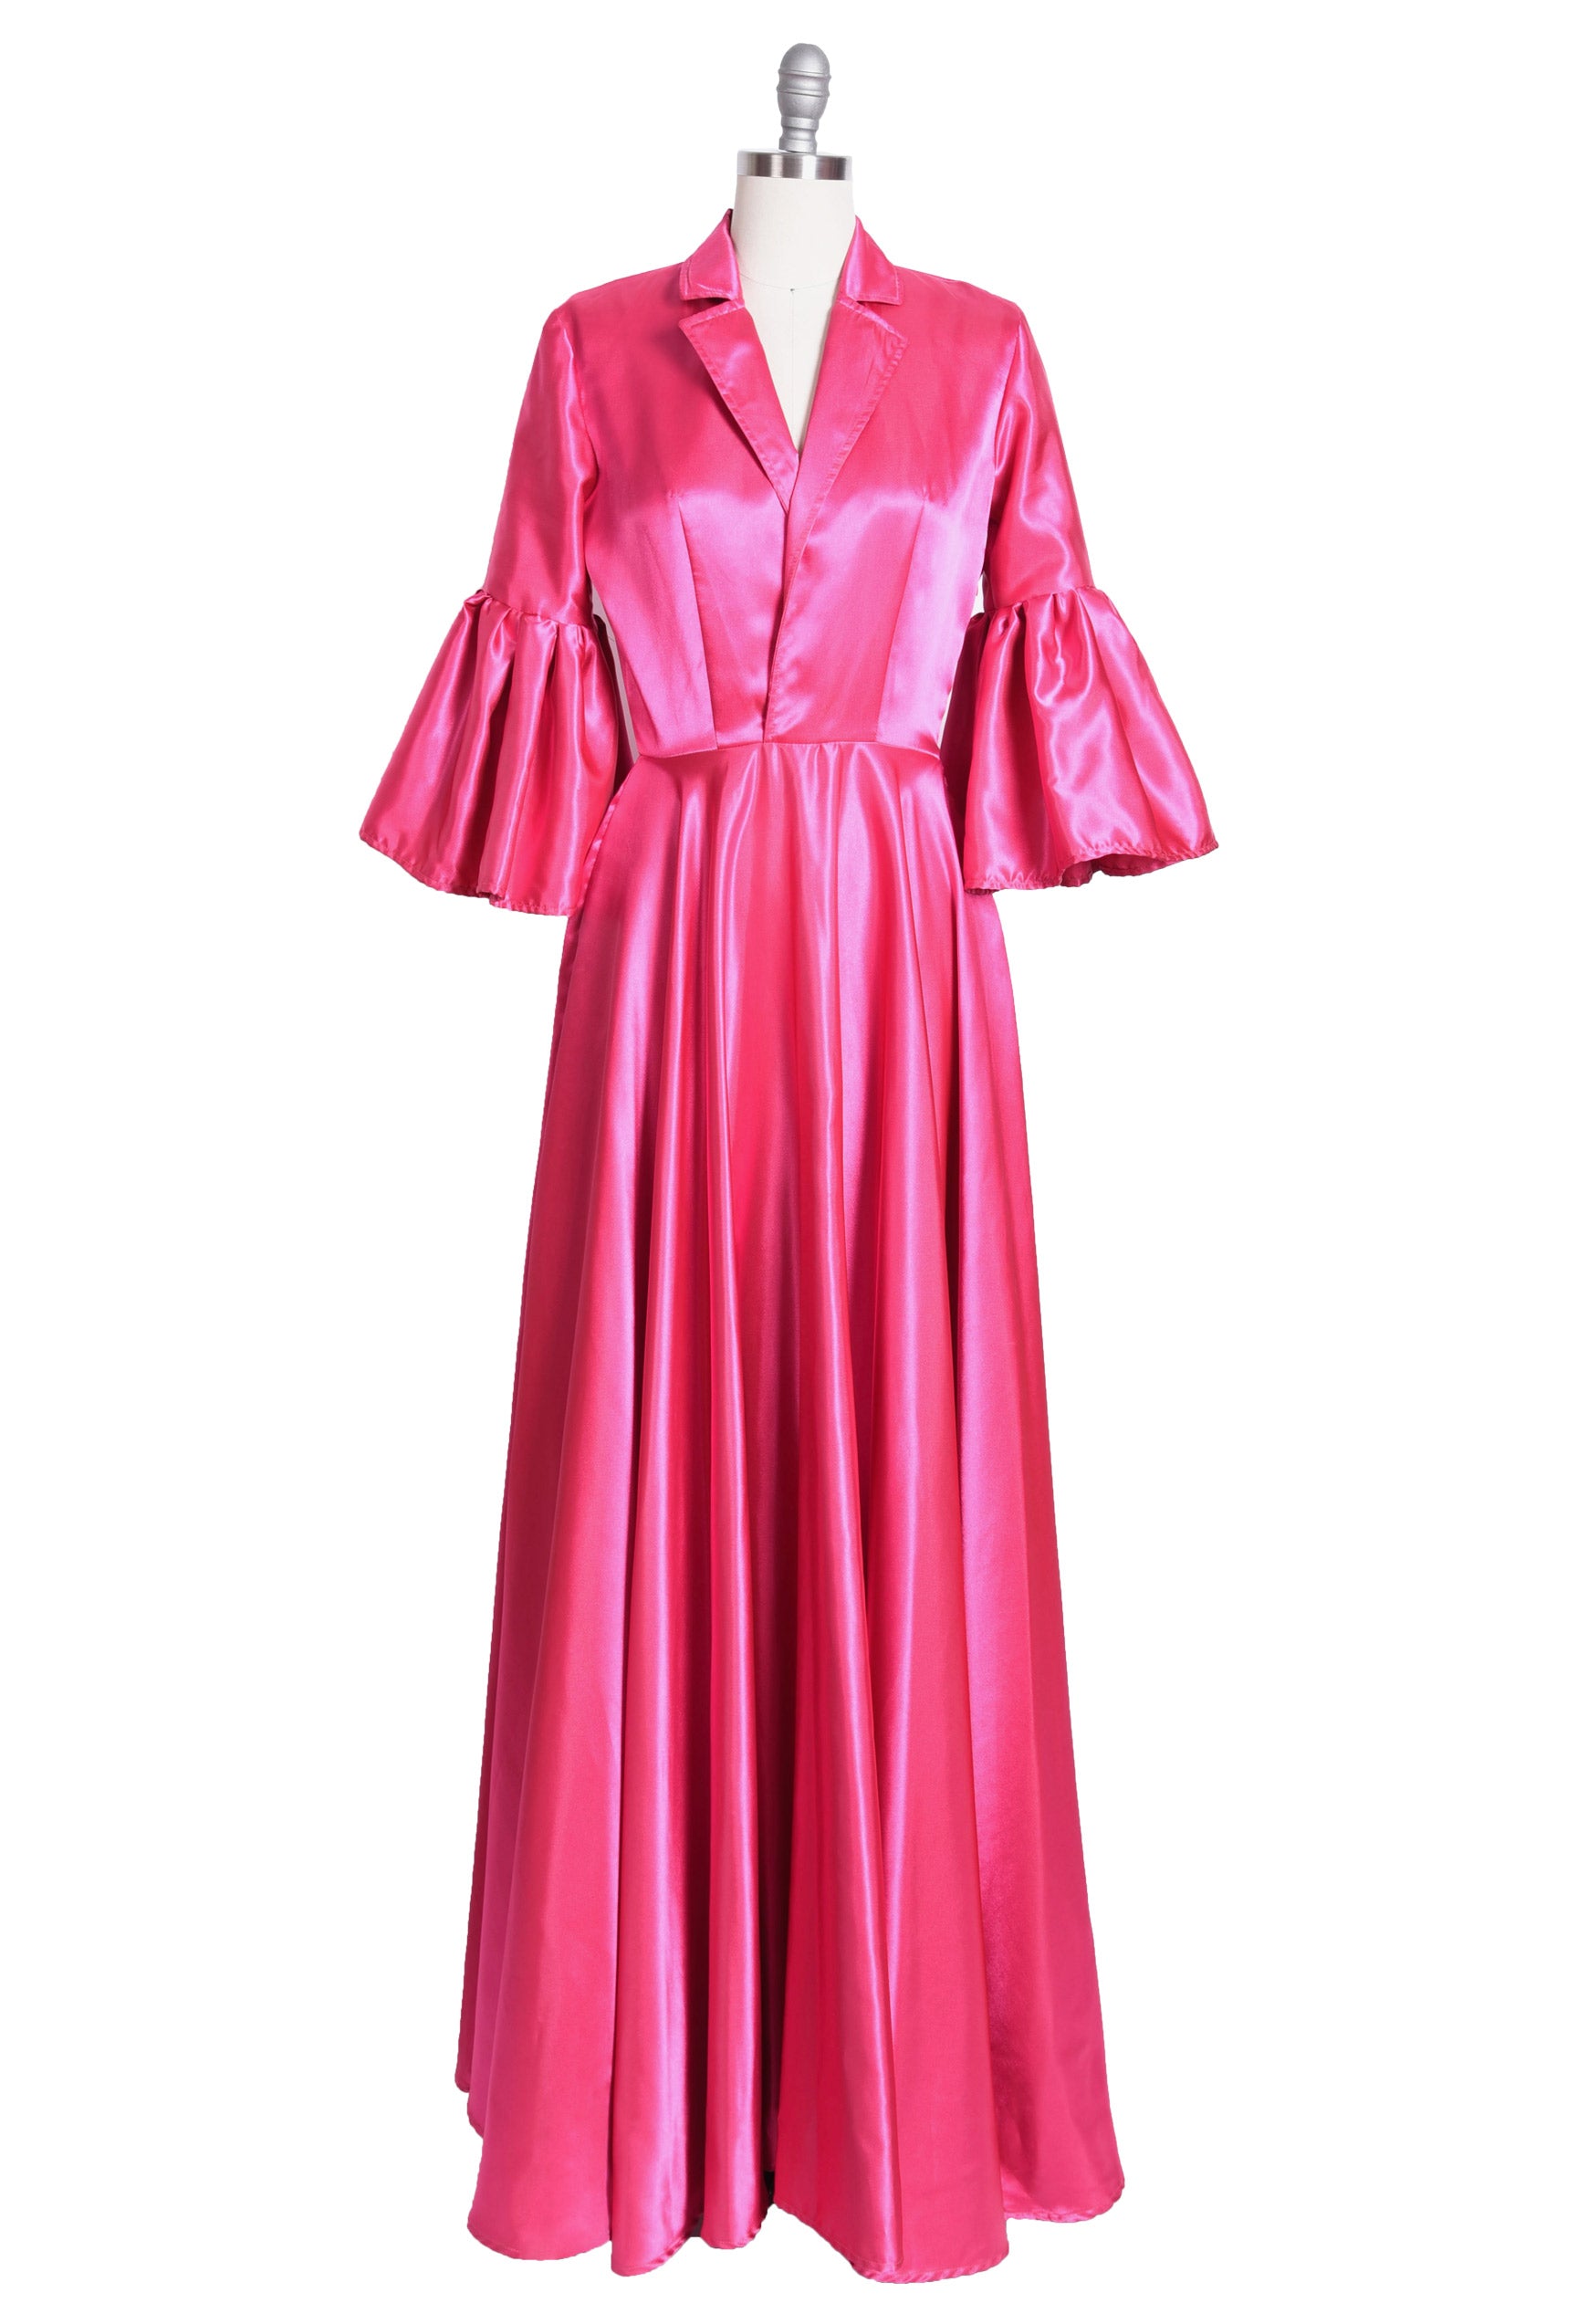 Hot Pink Shirt Dress#N# #N# #N##N# – #N# Sew Anastasia